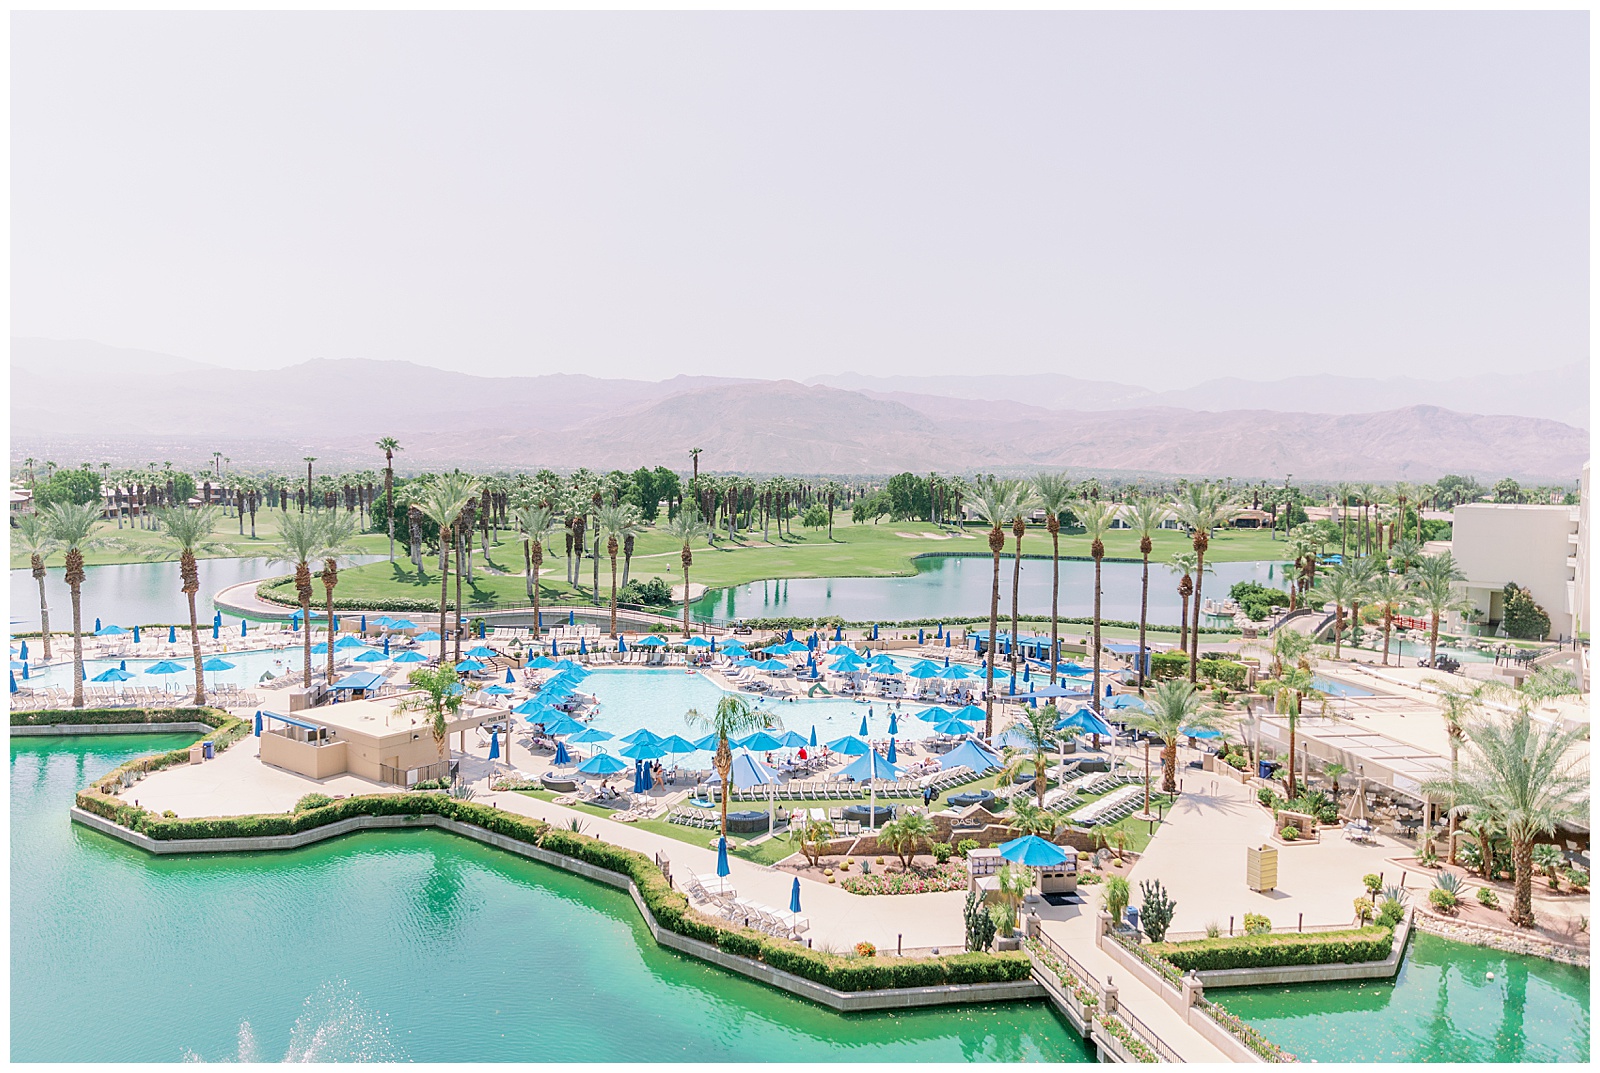 View of the pool at the JW Marriott Desert Springs Resort & Spa